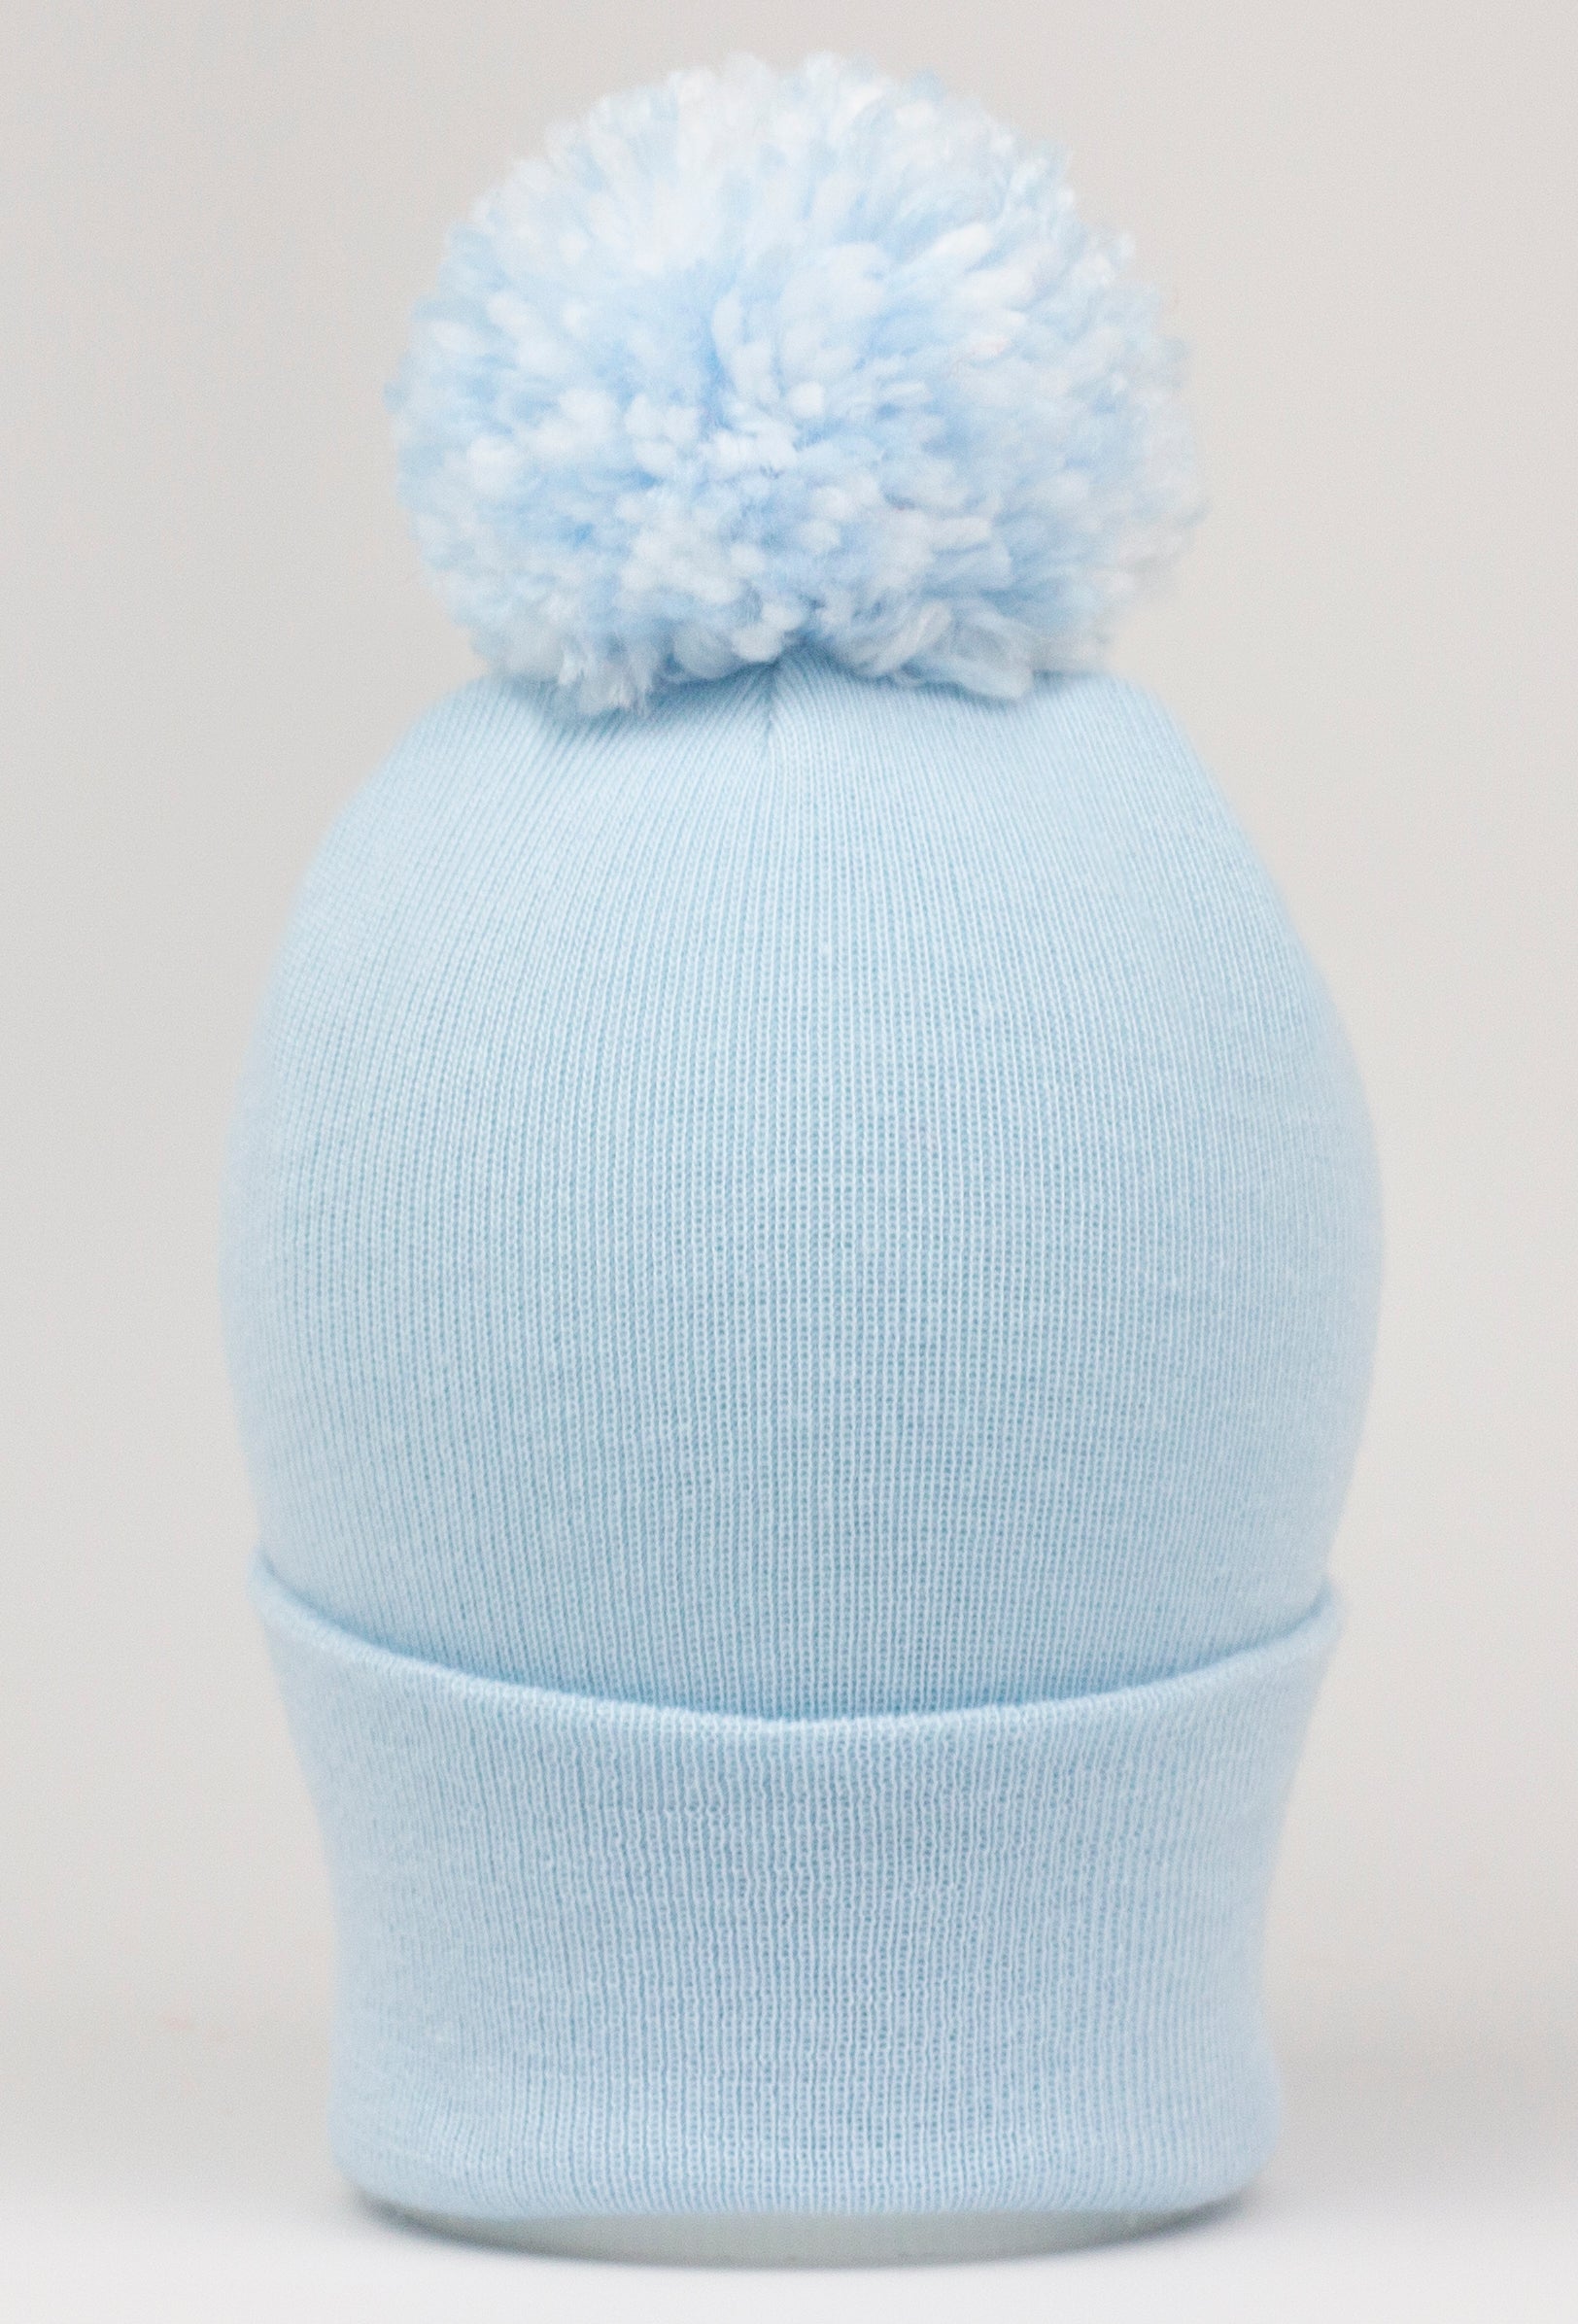 ilybean Baby Blue Beanie with MIXED Blue & White Pom Pom - Personalization Optional